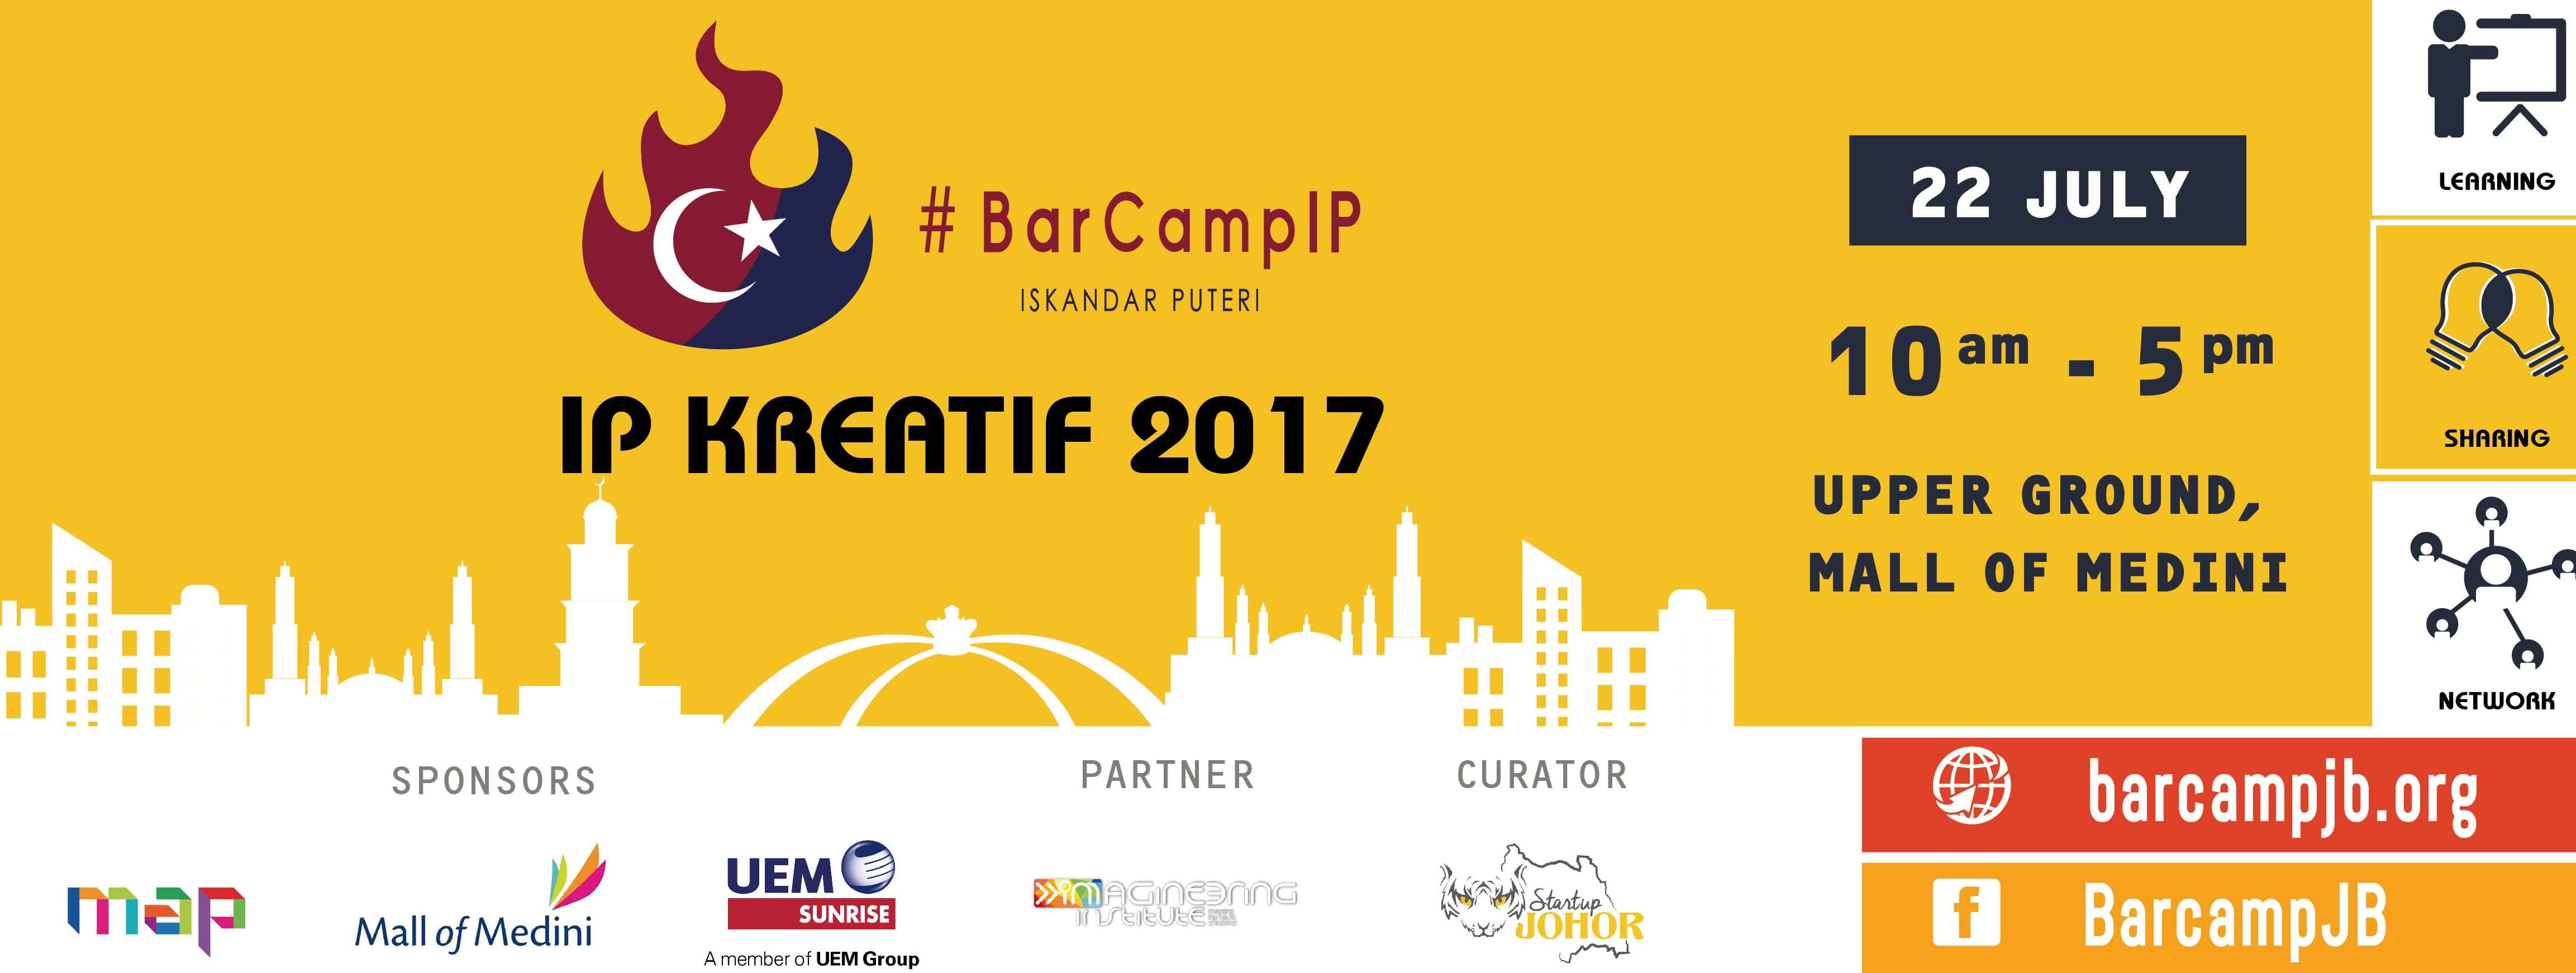 BarCamp Iskandar Puteri, Johor 2017